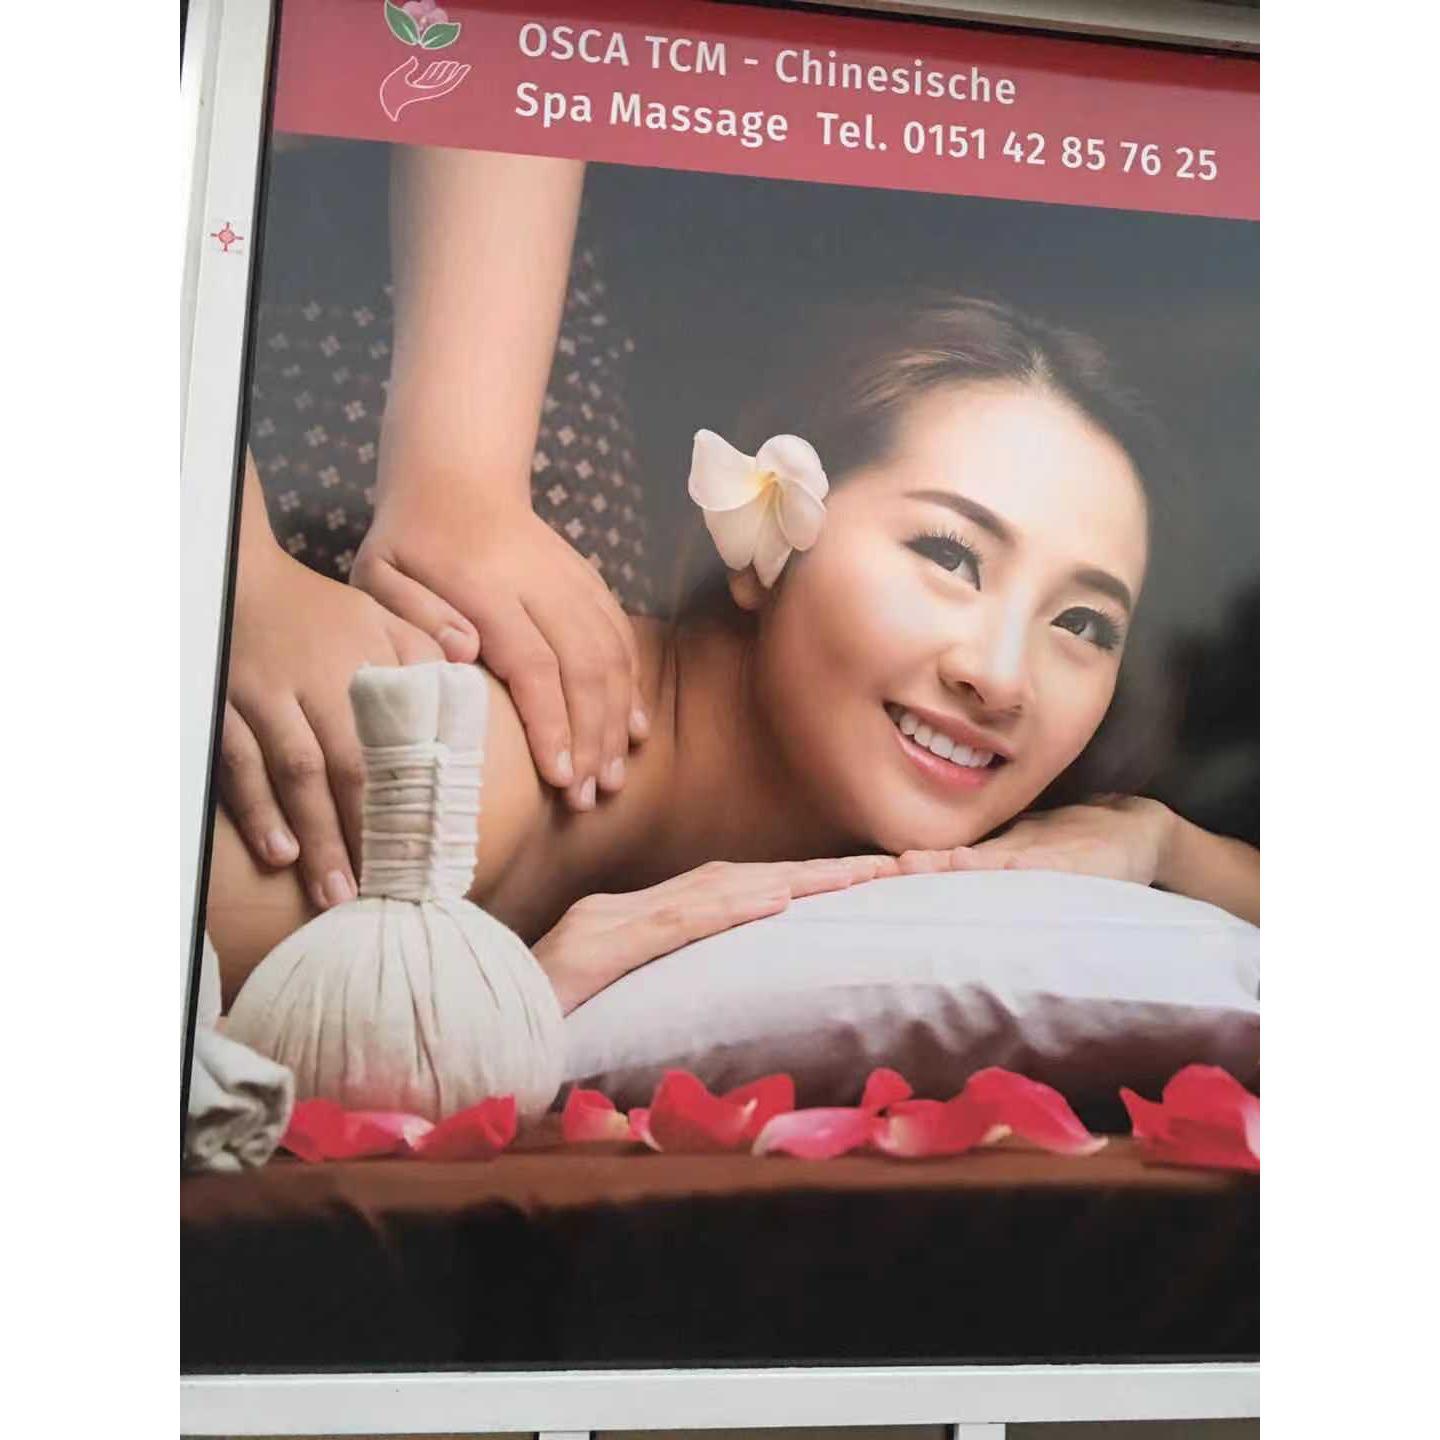 Logo Osca TCM - Chinesische Spa Massage